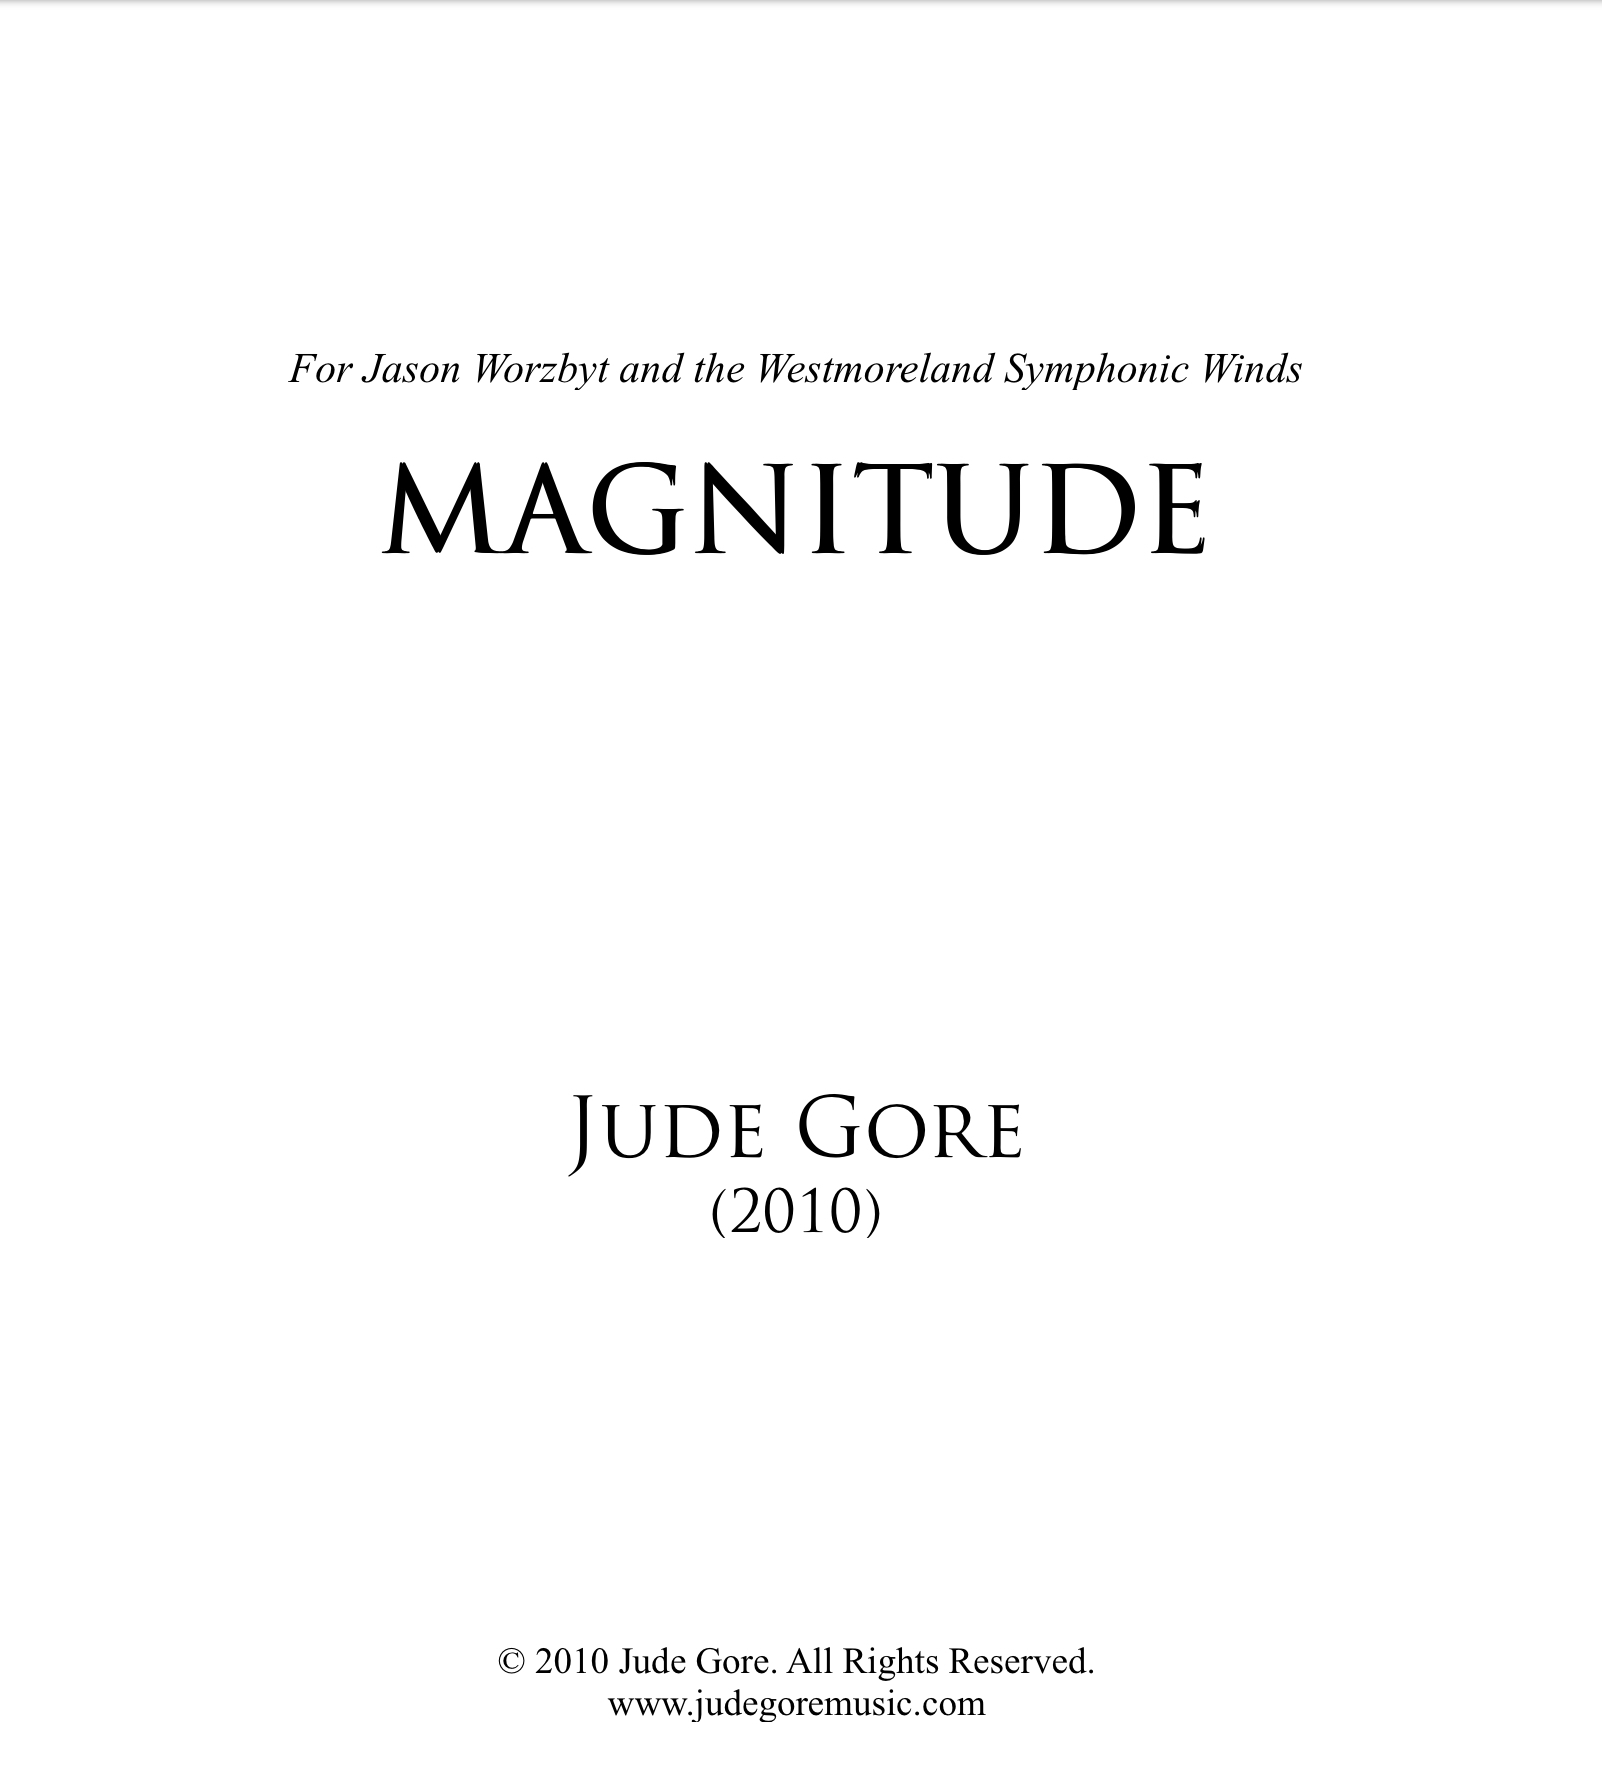 Magnitude  by Jude Gore